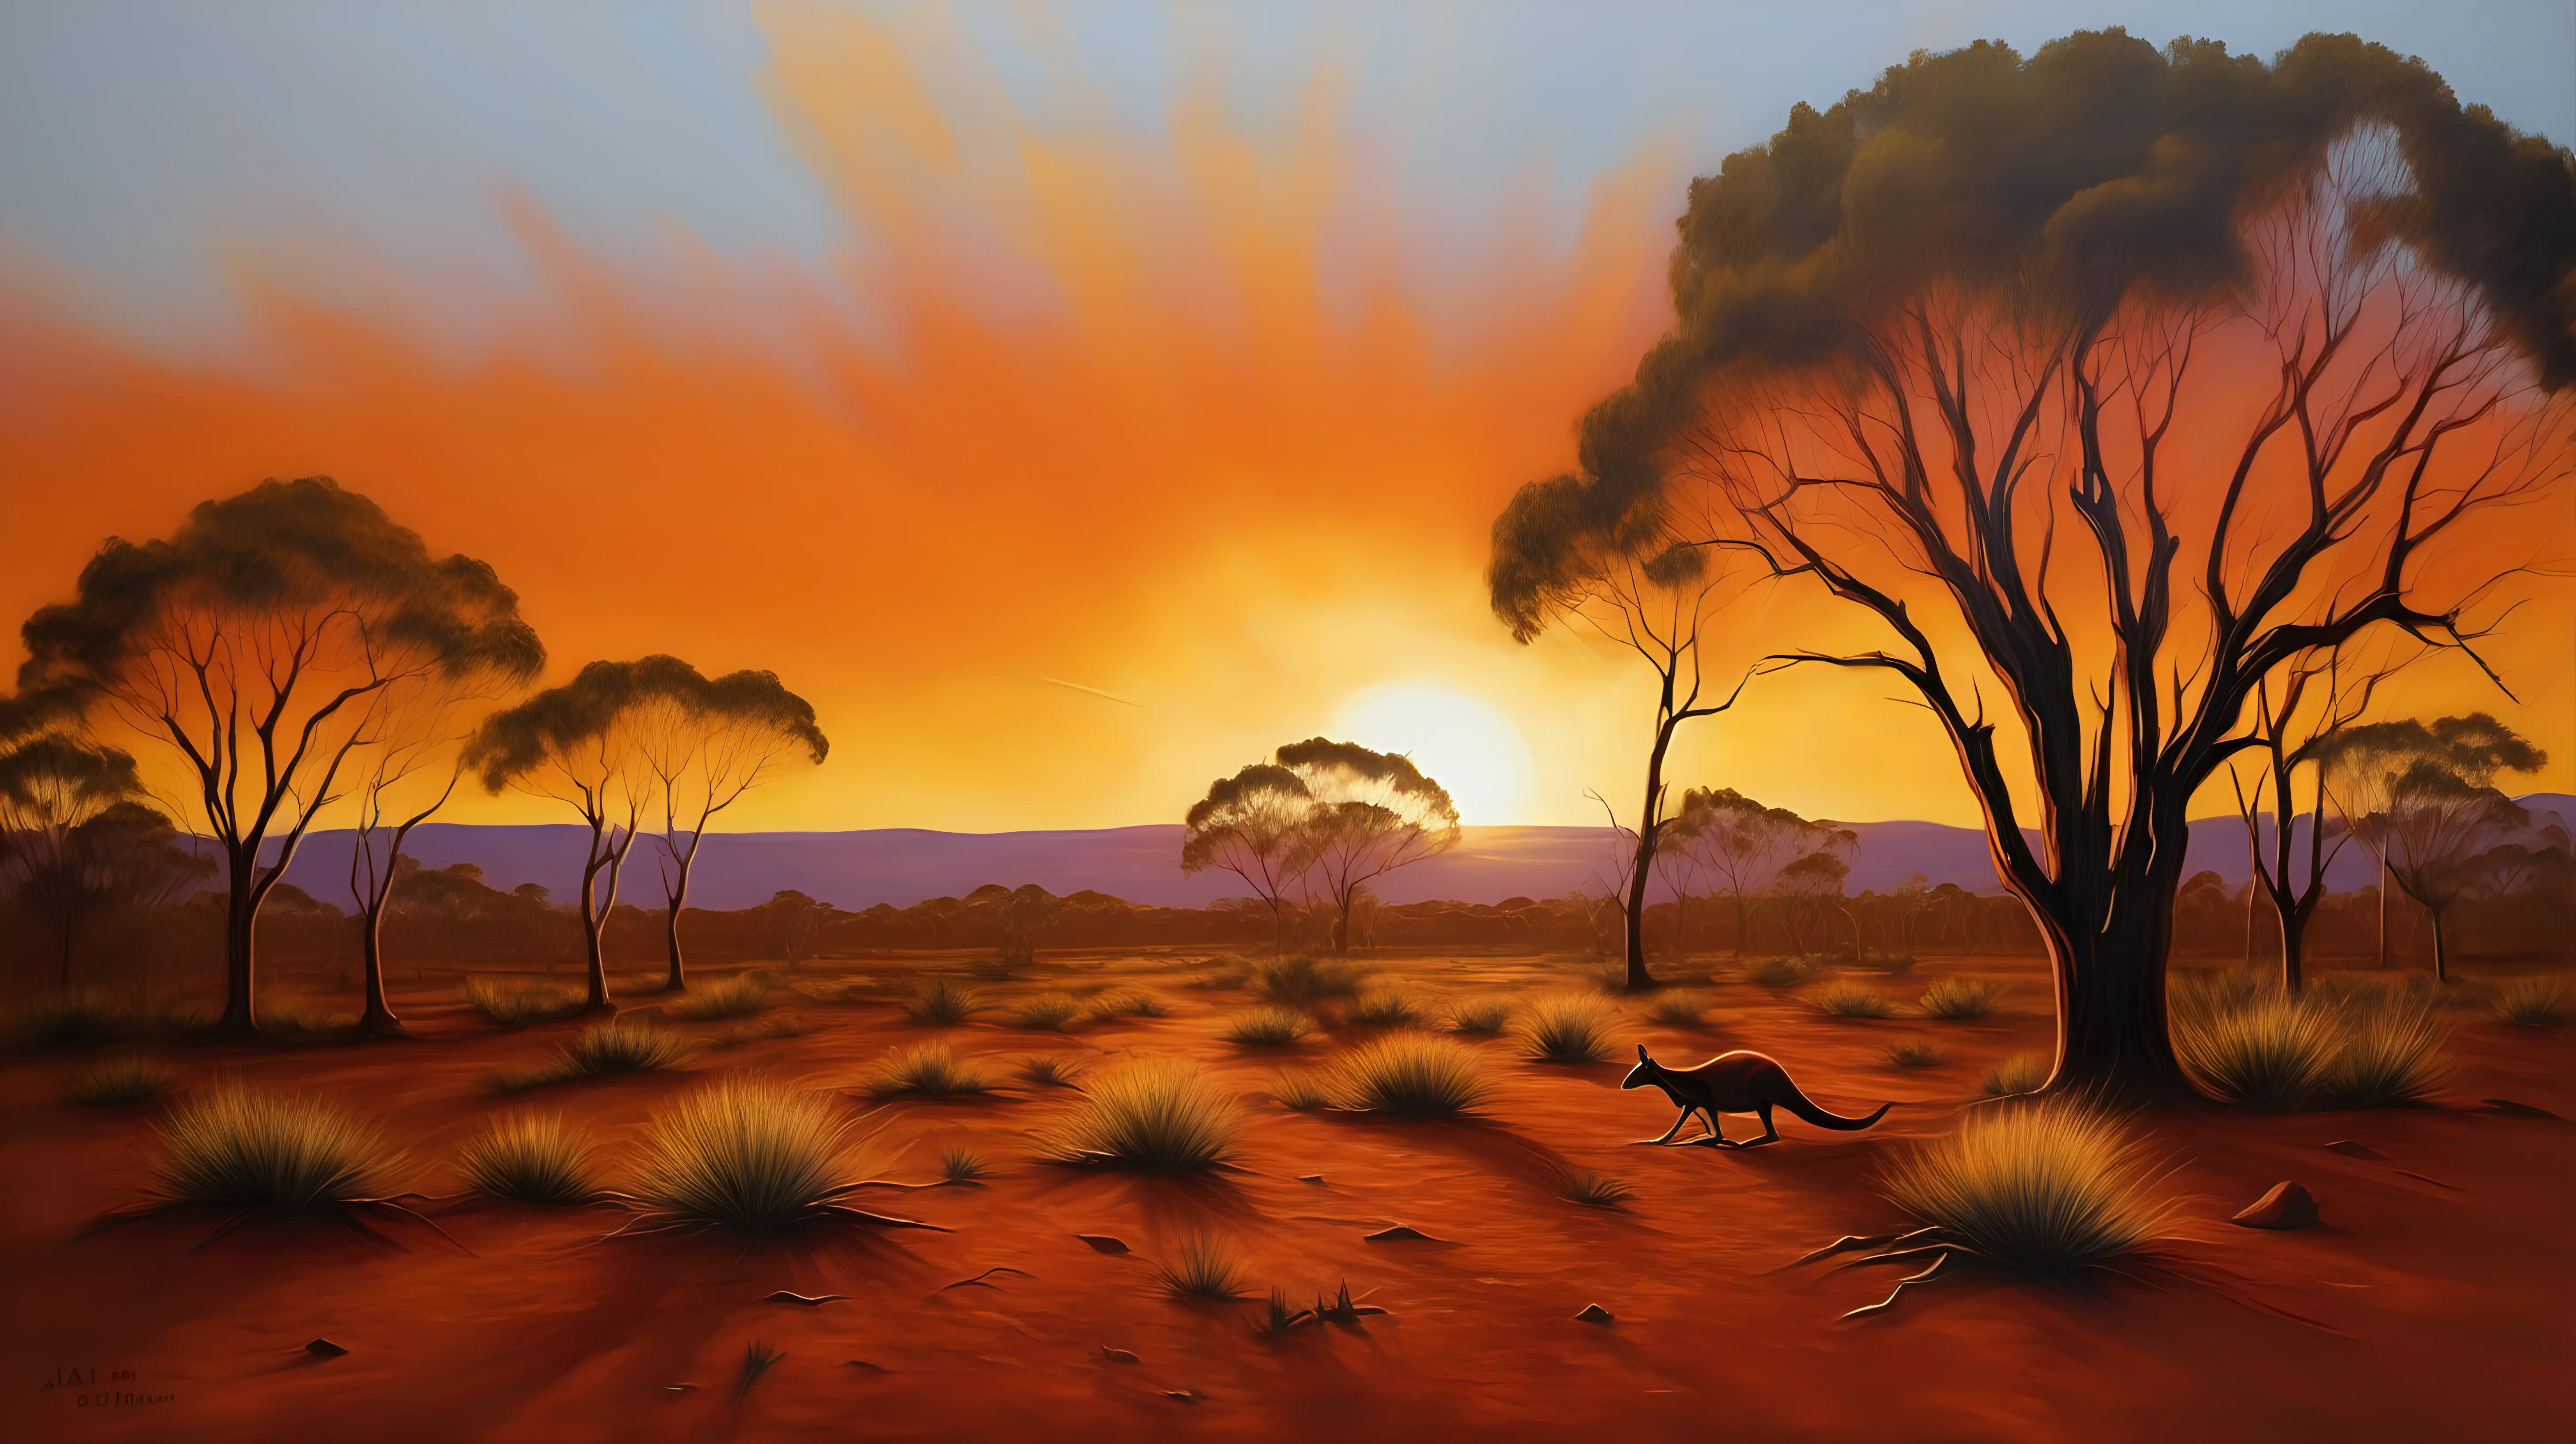 Serene Outback Sunset Capturing the Vast Beauty of Australian Wilderness in Oil Painting